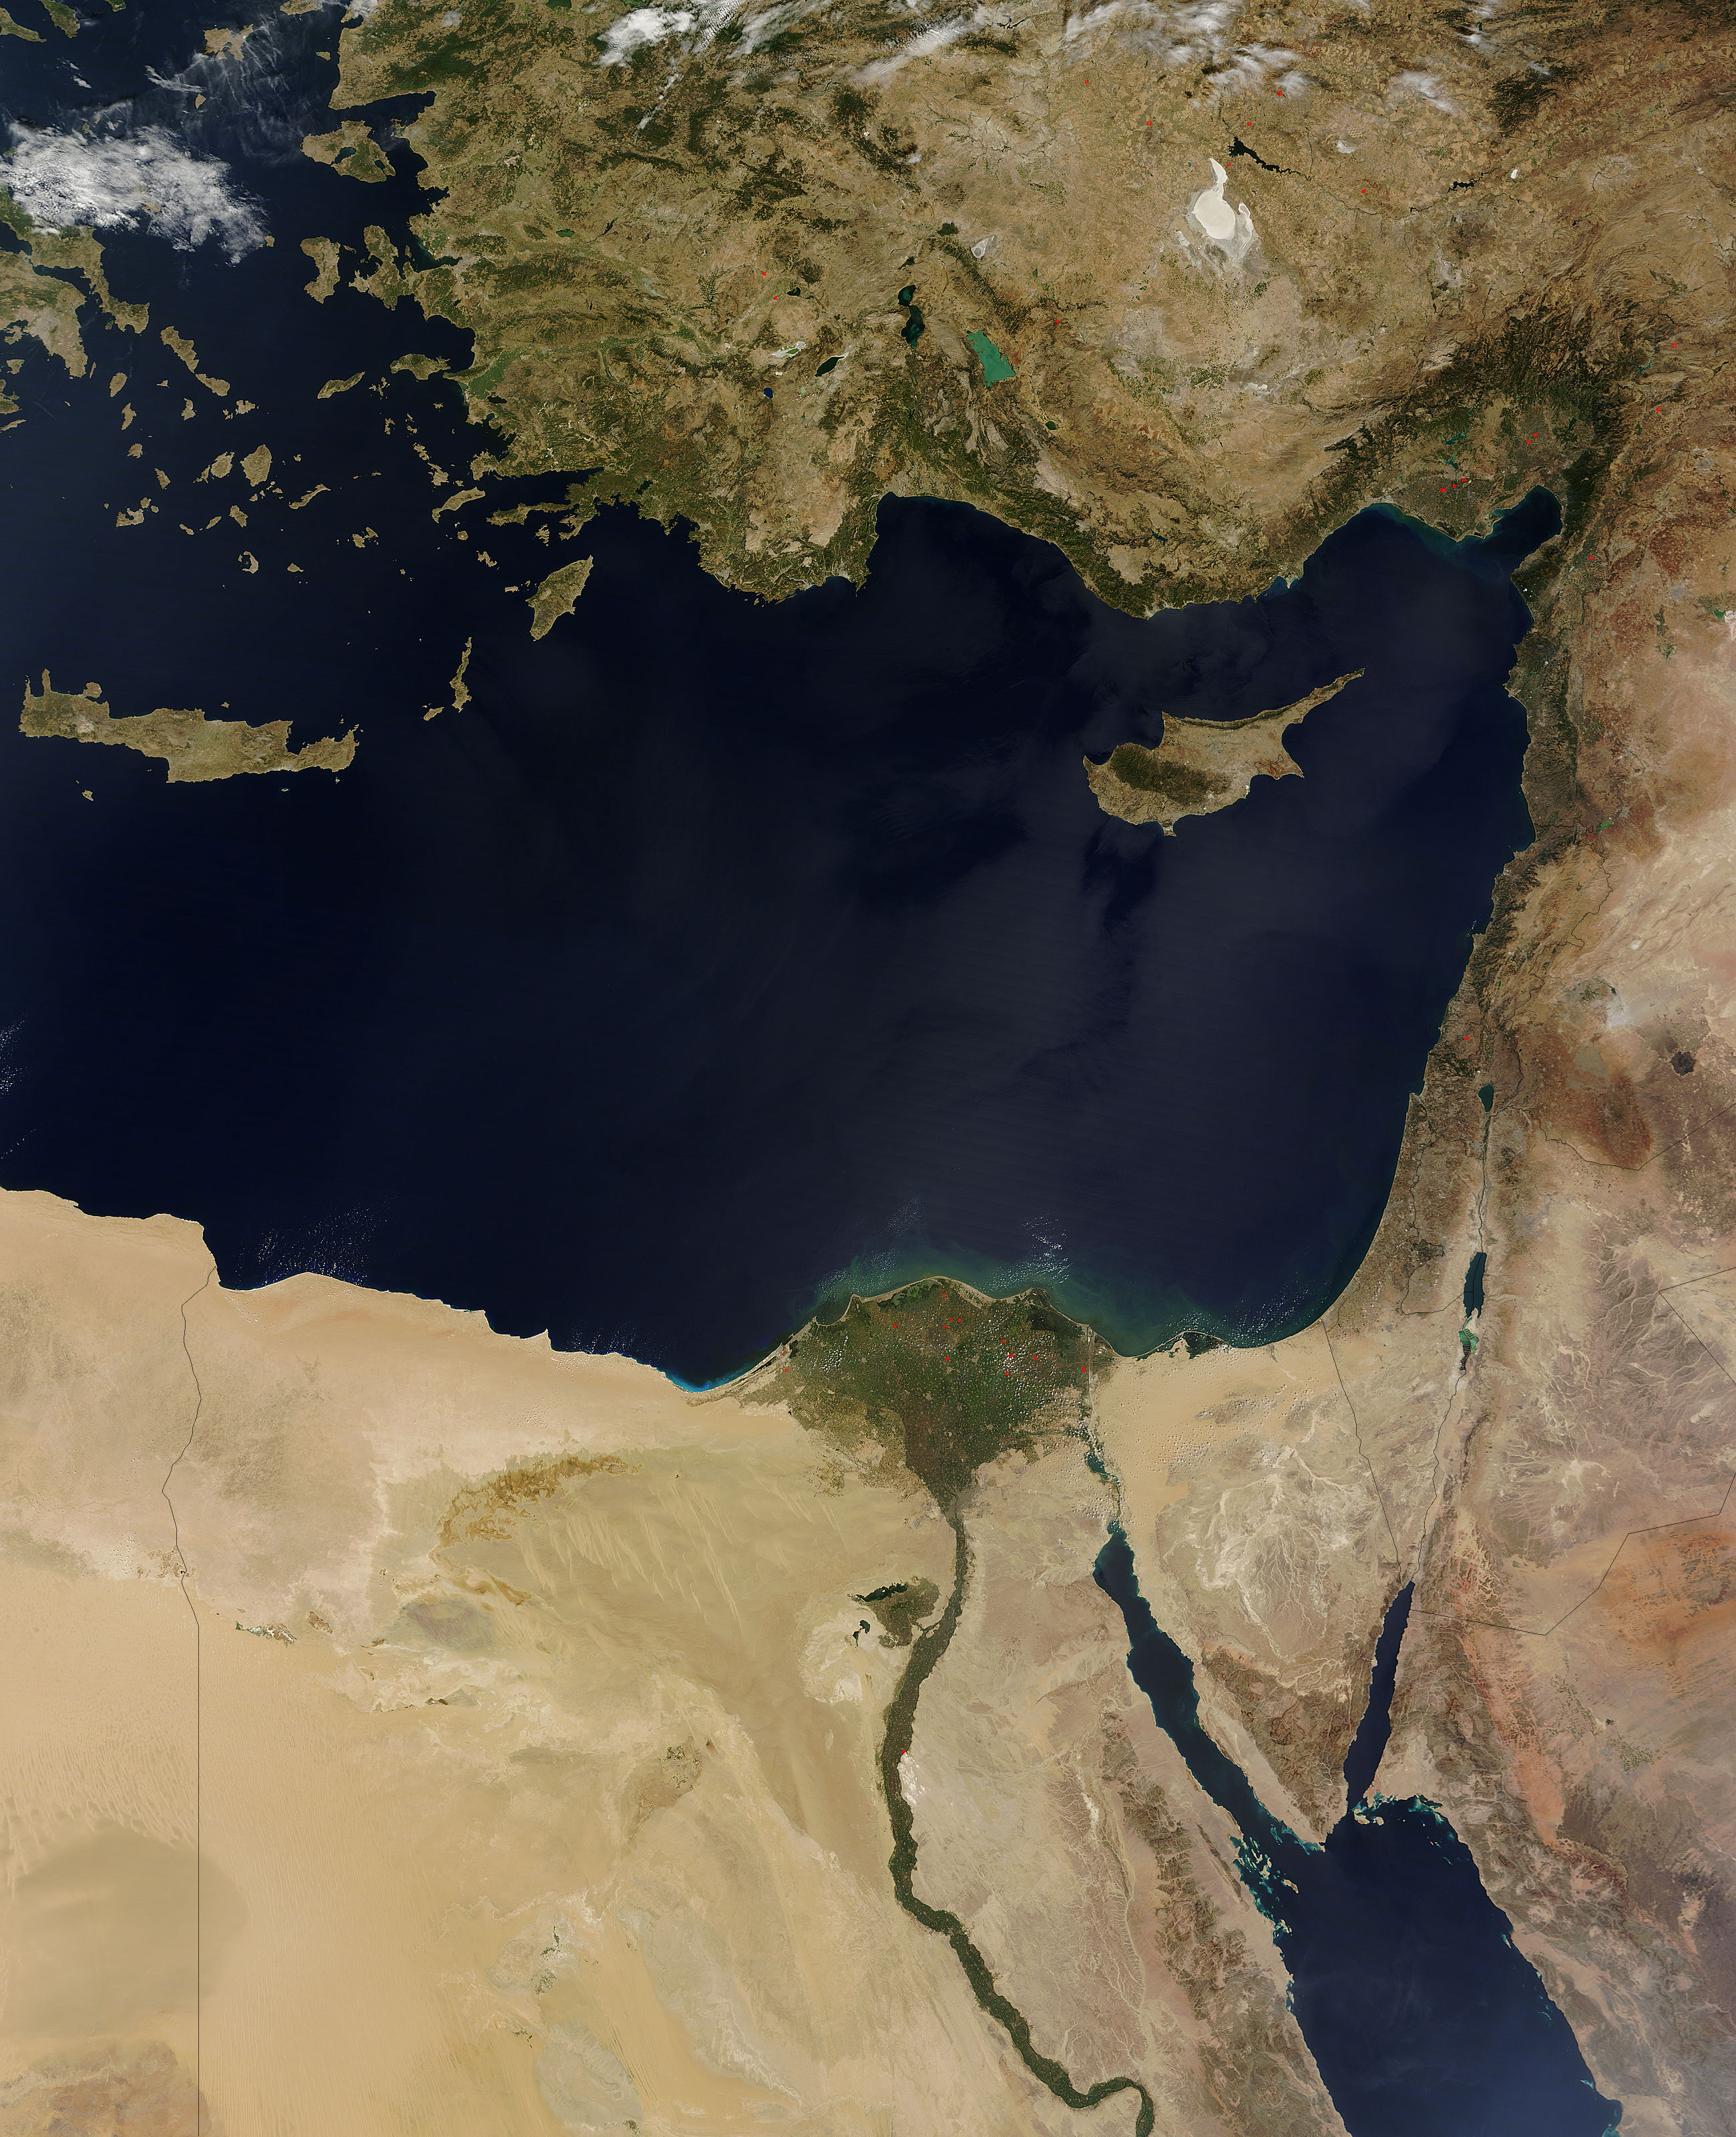 eastern mediterranean sea map